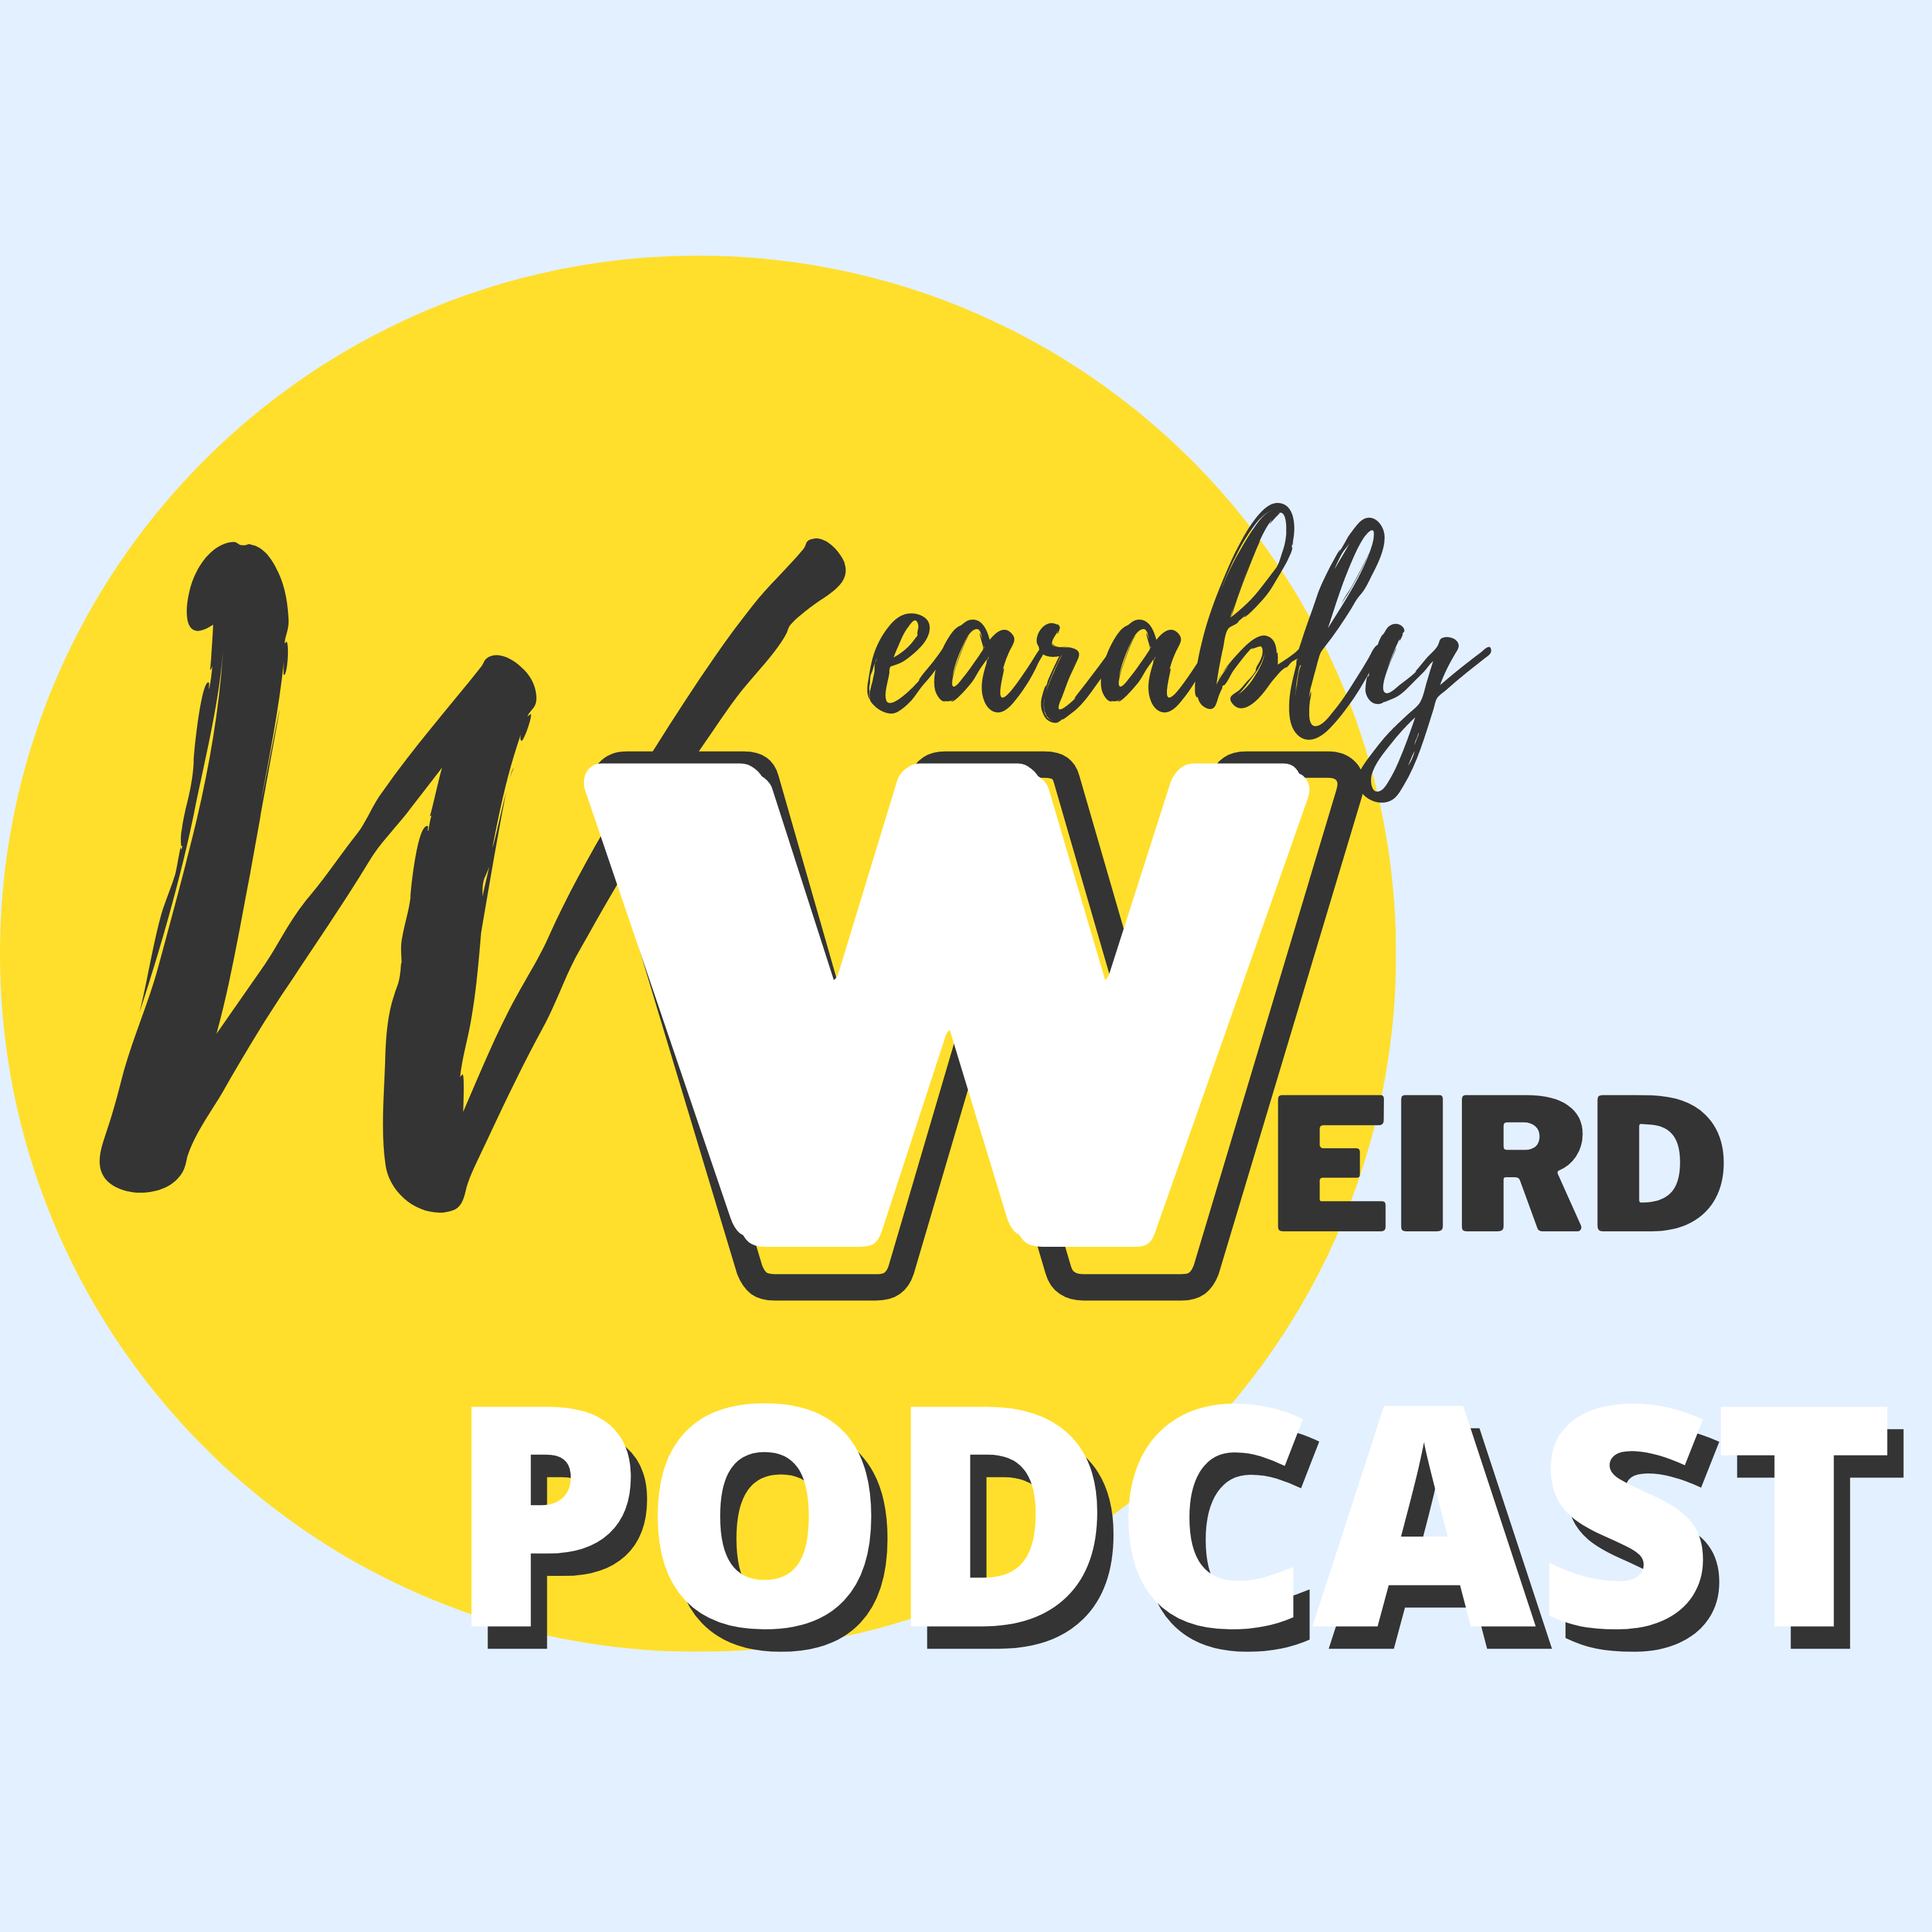 The Wearably Weird Podcast